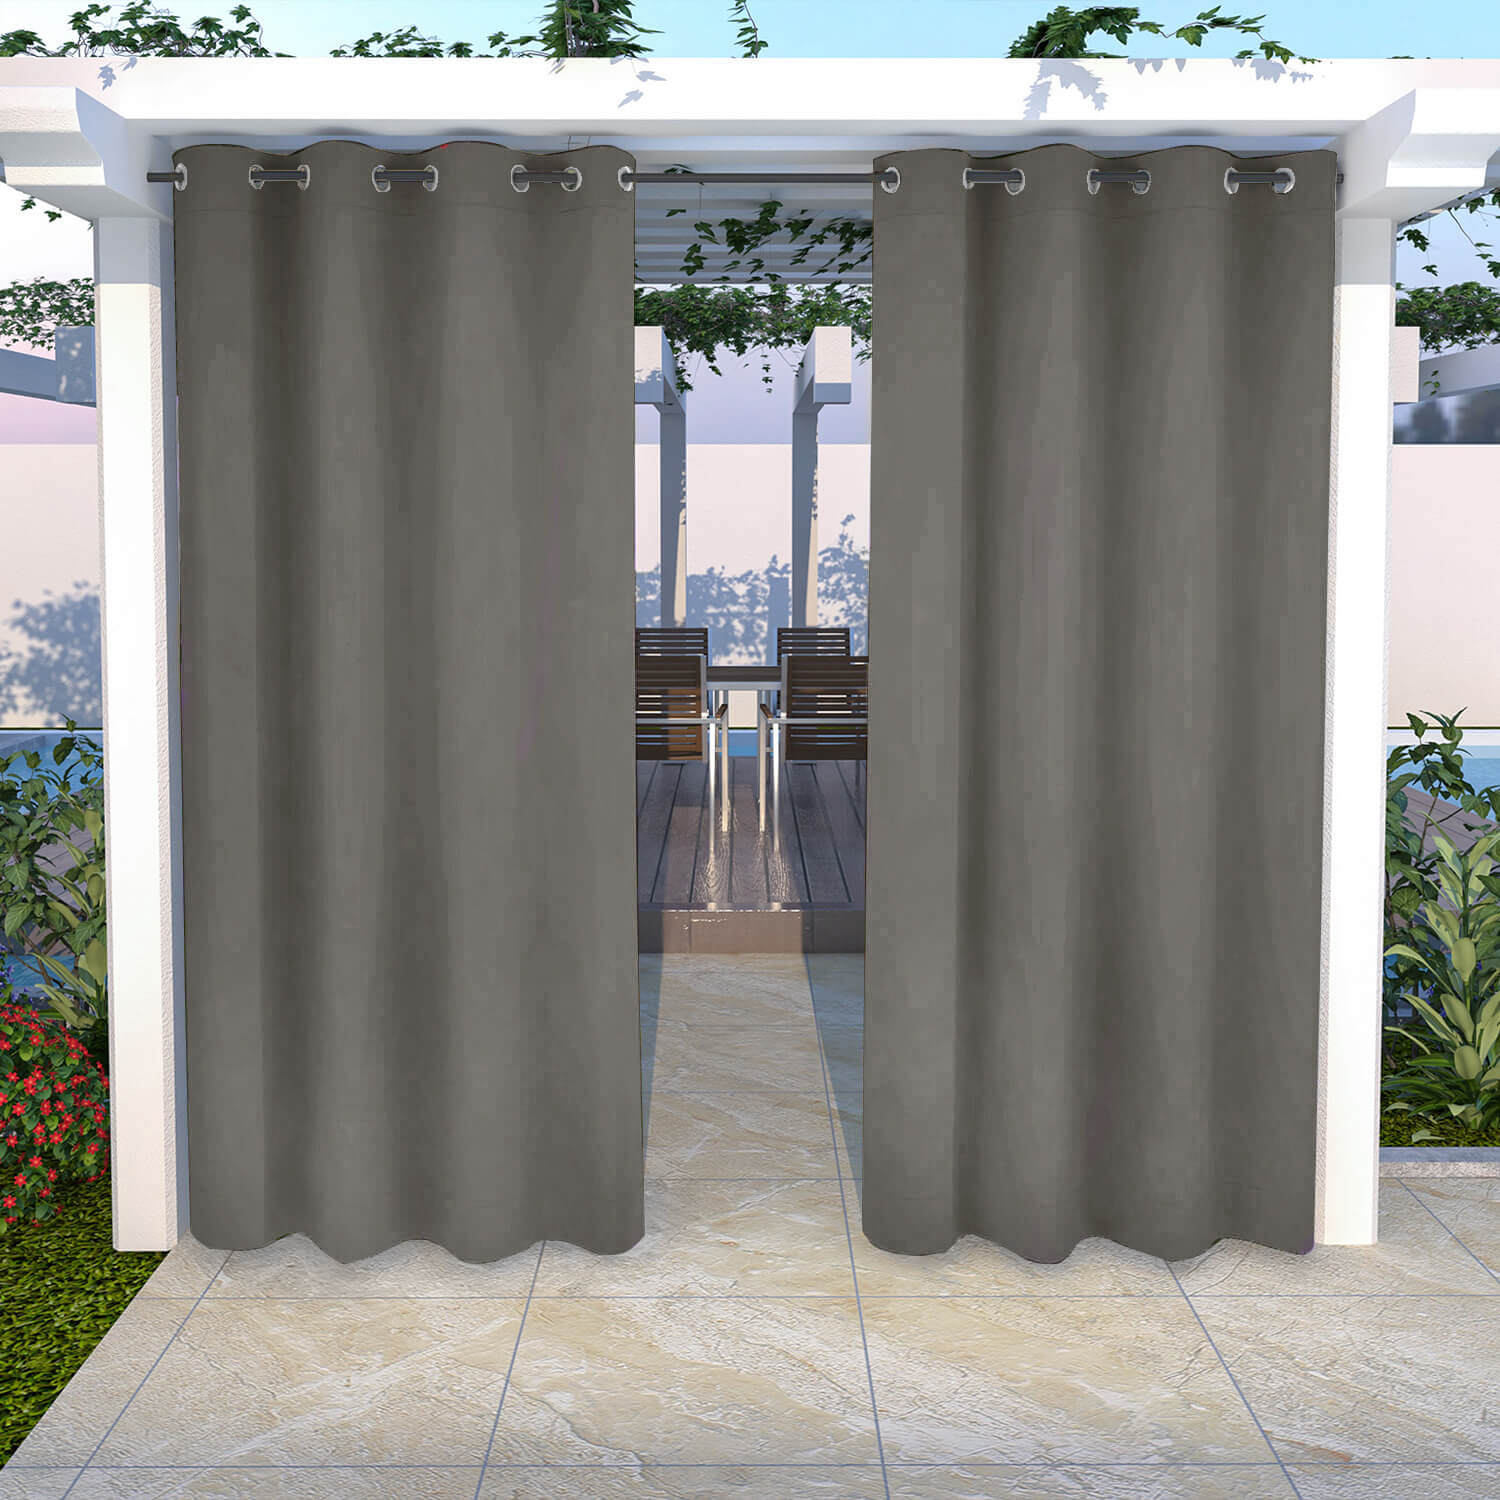 Snowcity Outdoor Curtains Waterproof Grommet Top 1 Panel - Charcoal